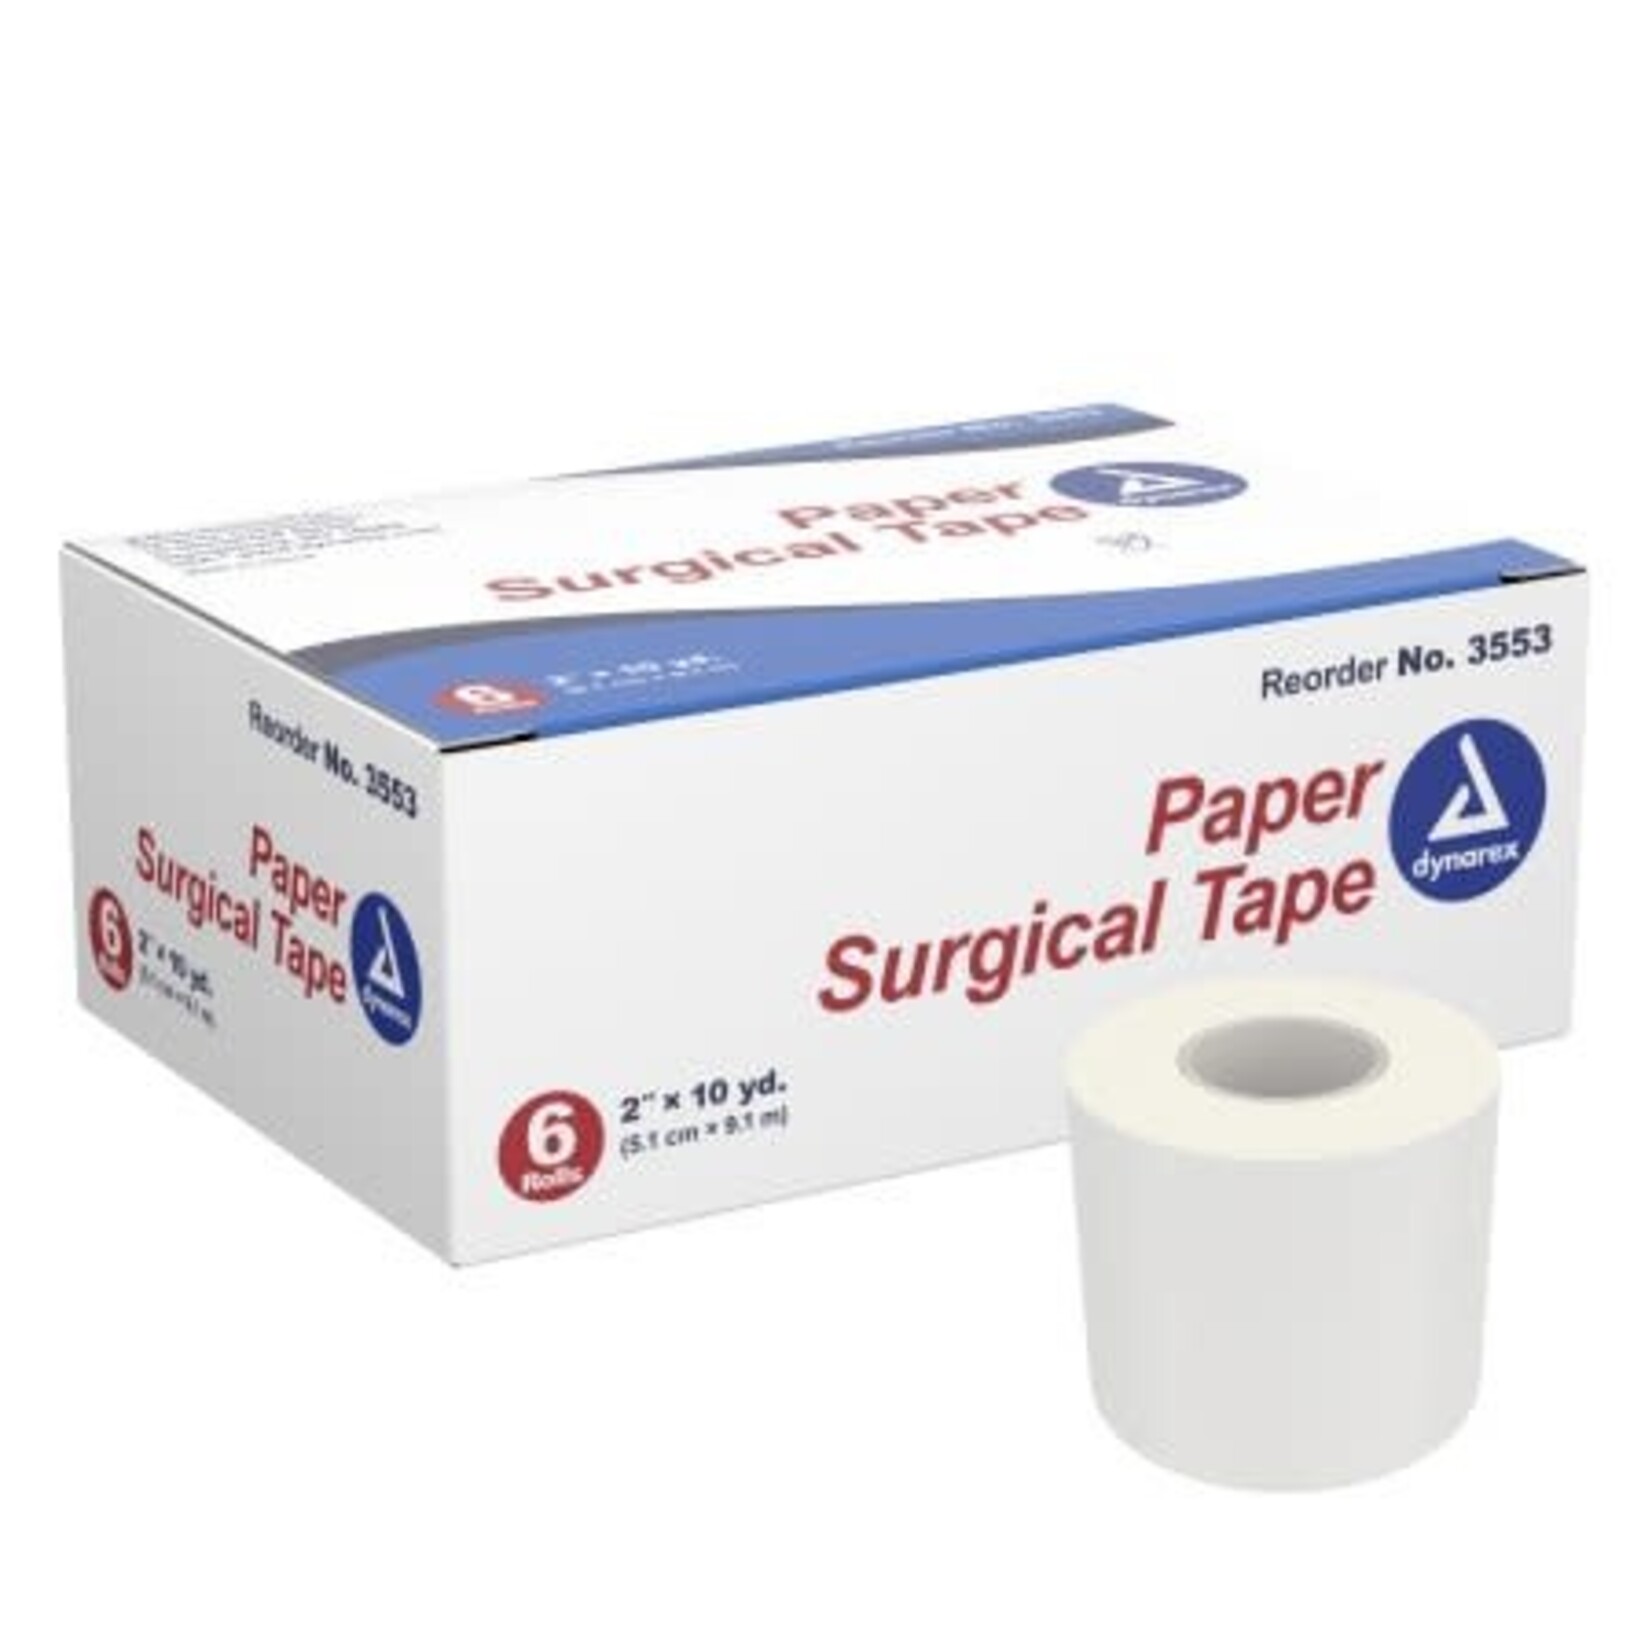 Medical Tape Dynarex® White 2 Inch X 10 Yard Paper NonSterile